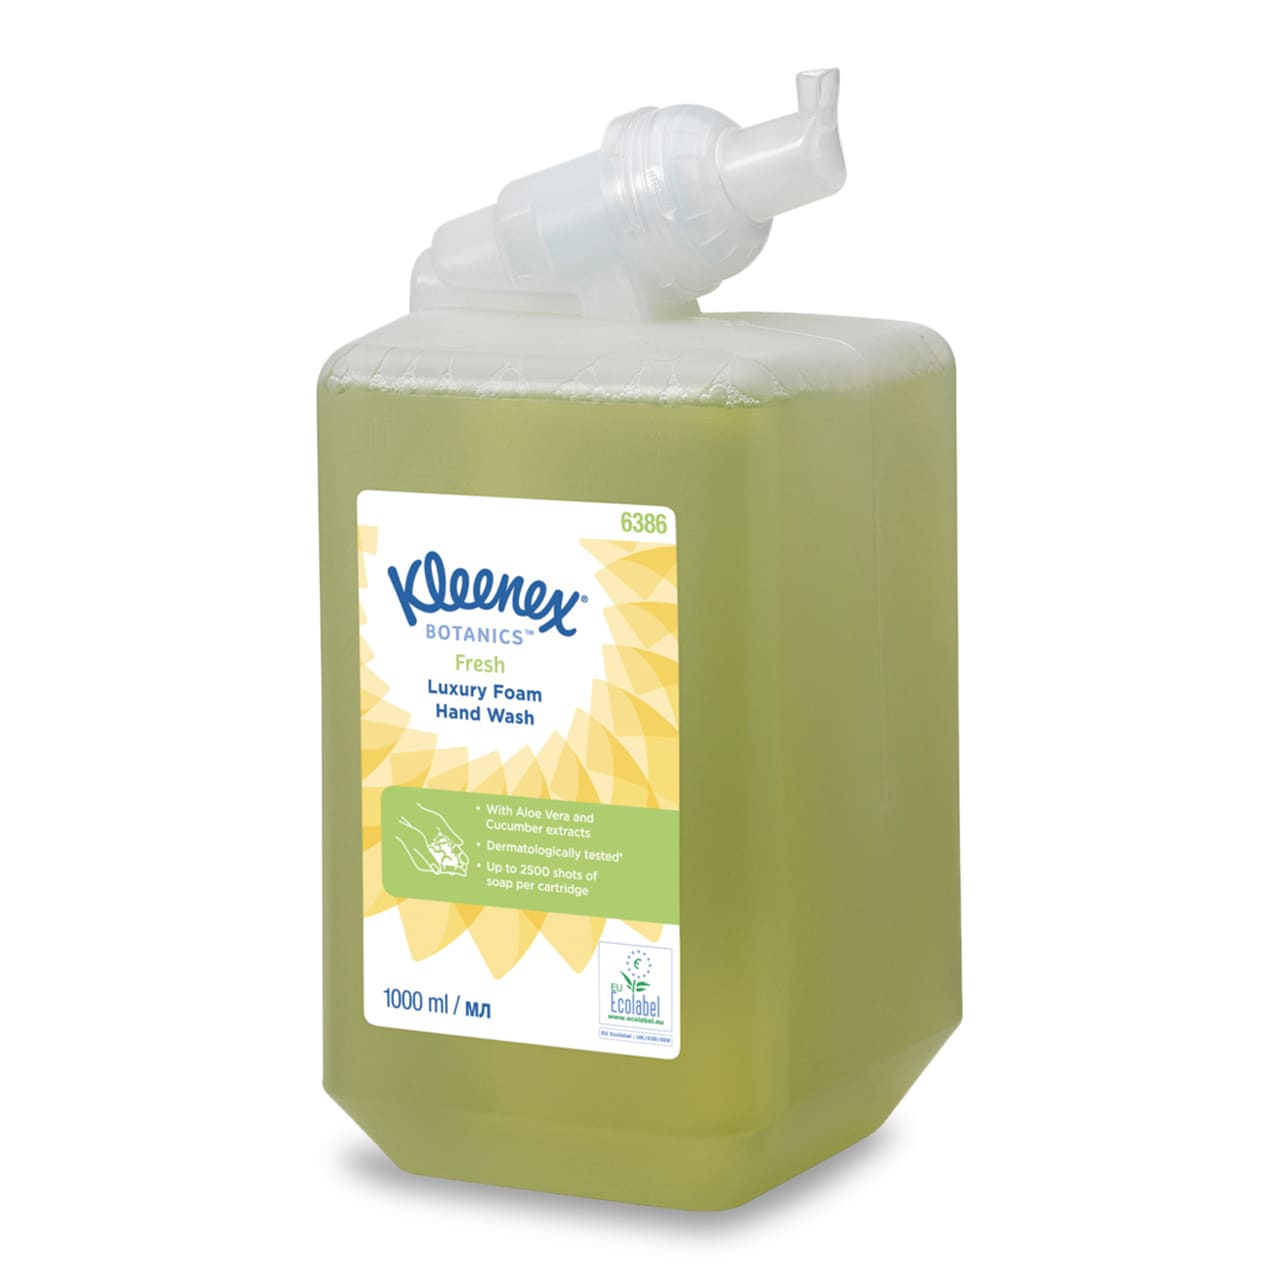 Kleenex® Botanics™ Fresh Savon mousse